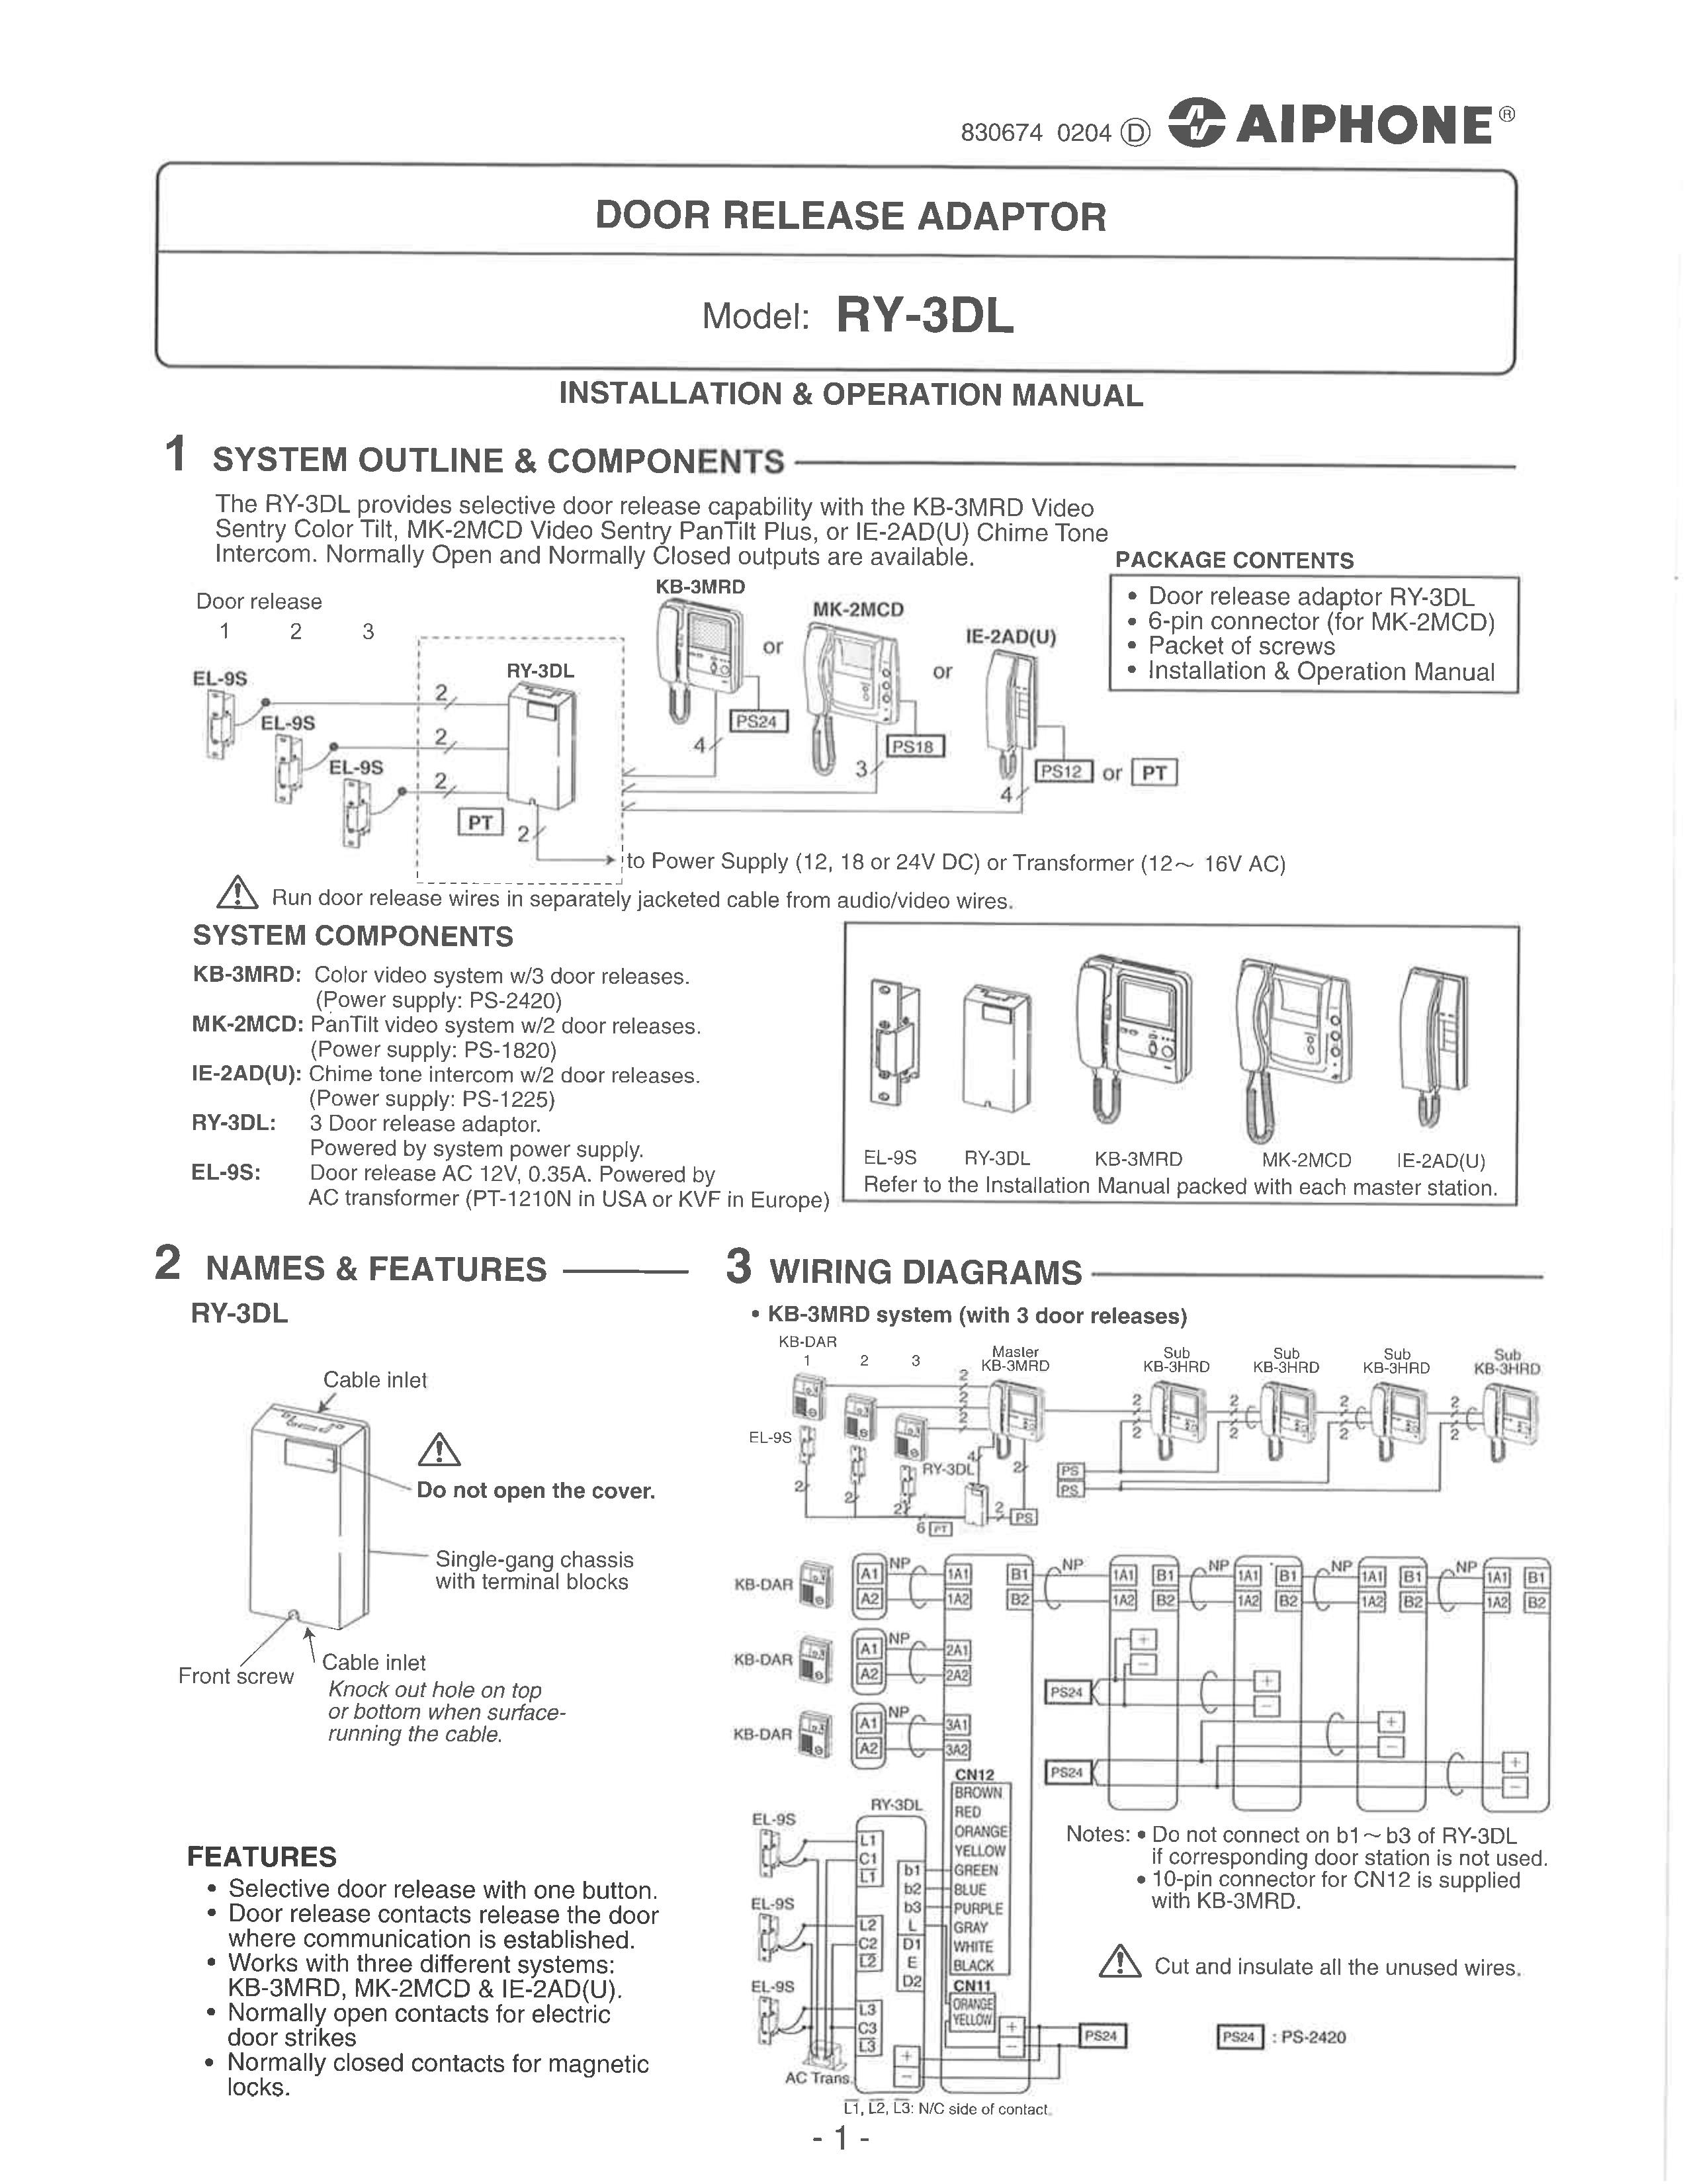 Aiphone ry-3dl Refrigerator User Manual